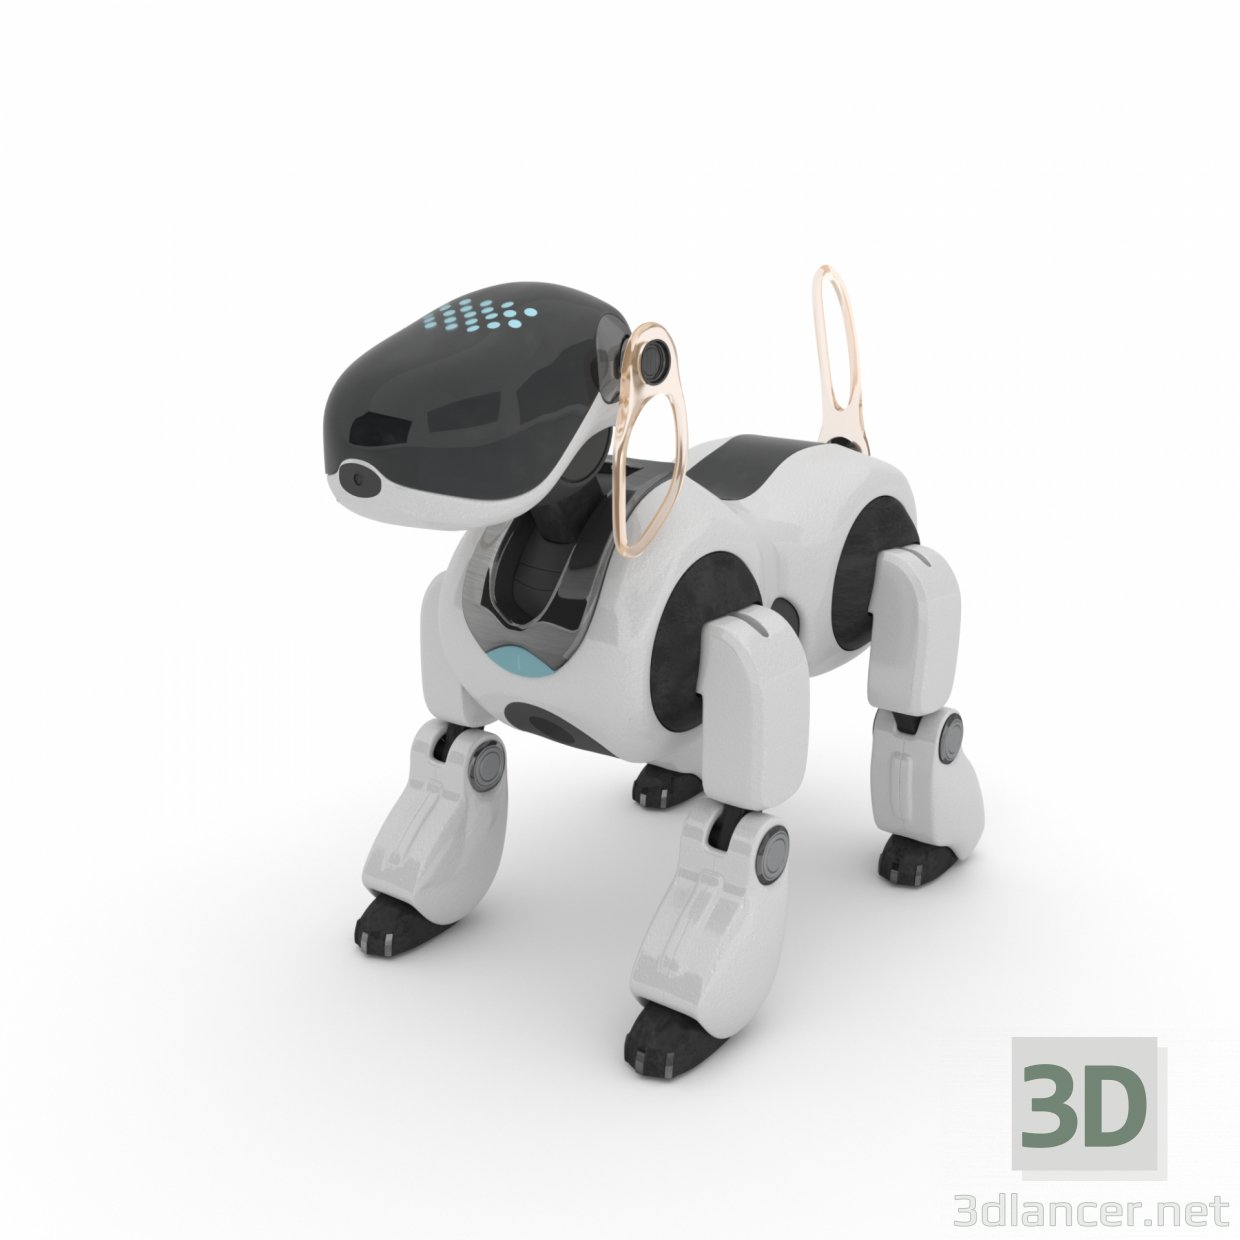 Aibo 3D-Modell kaufen - Rendern